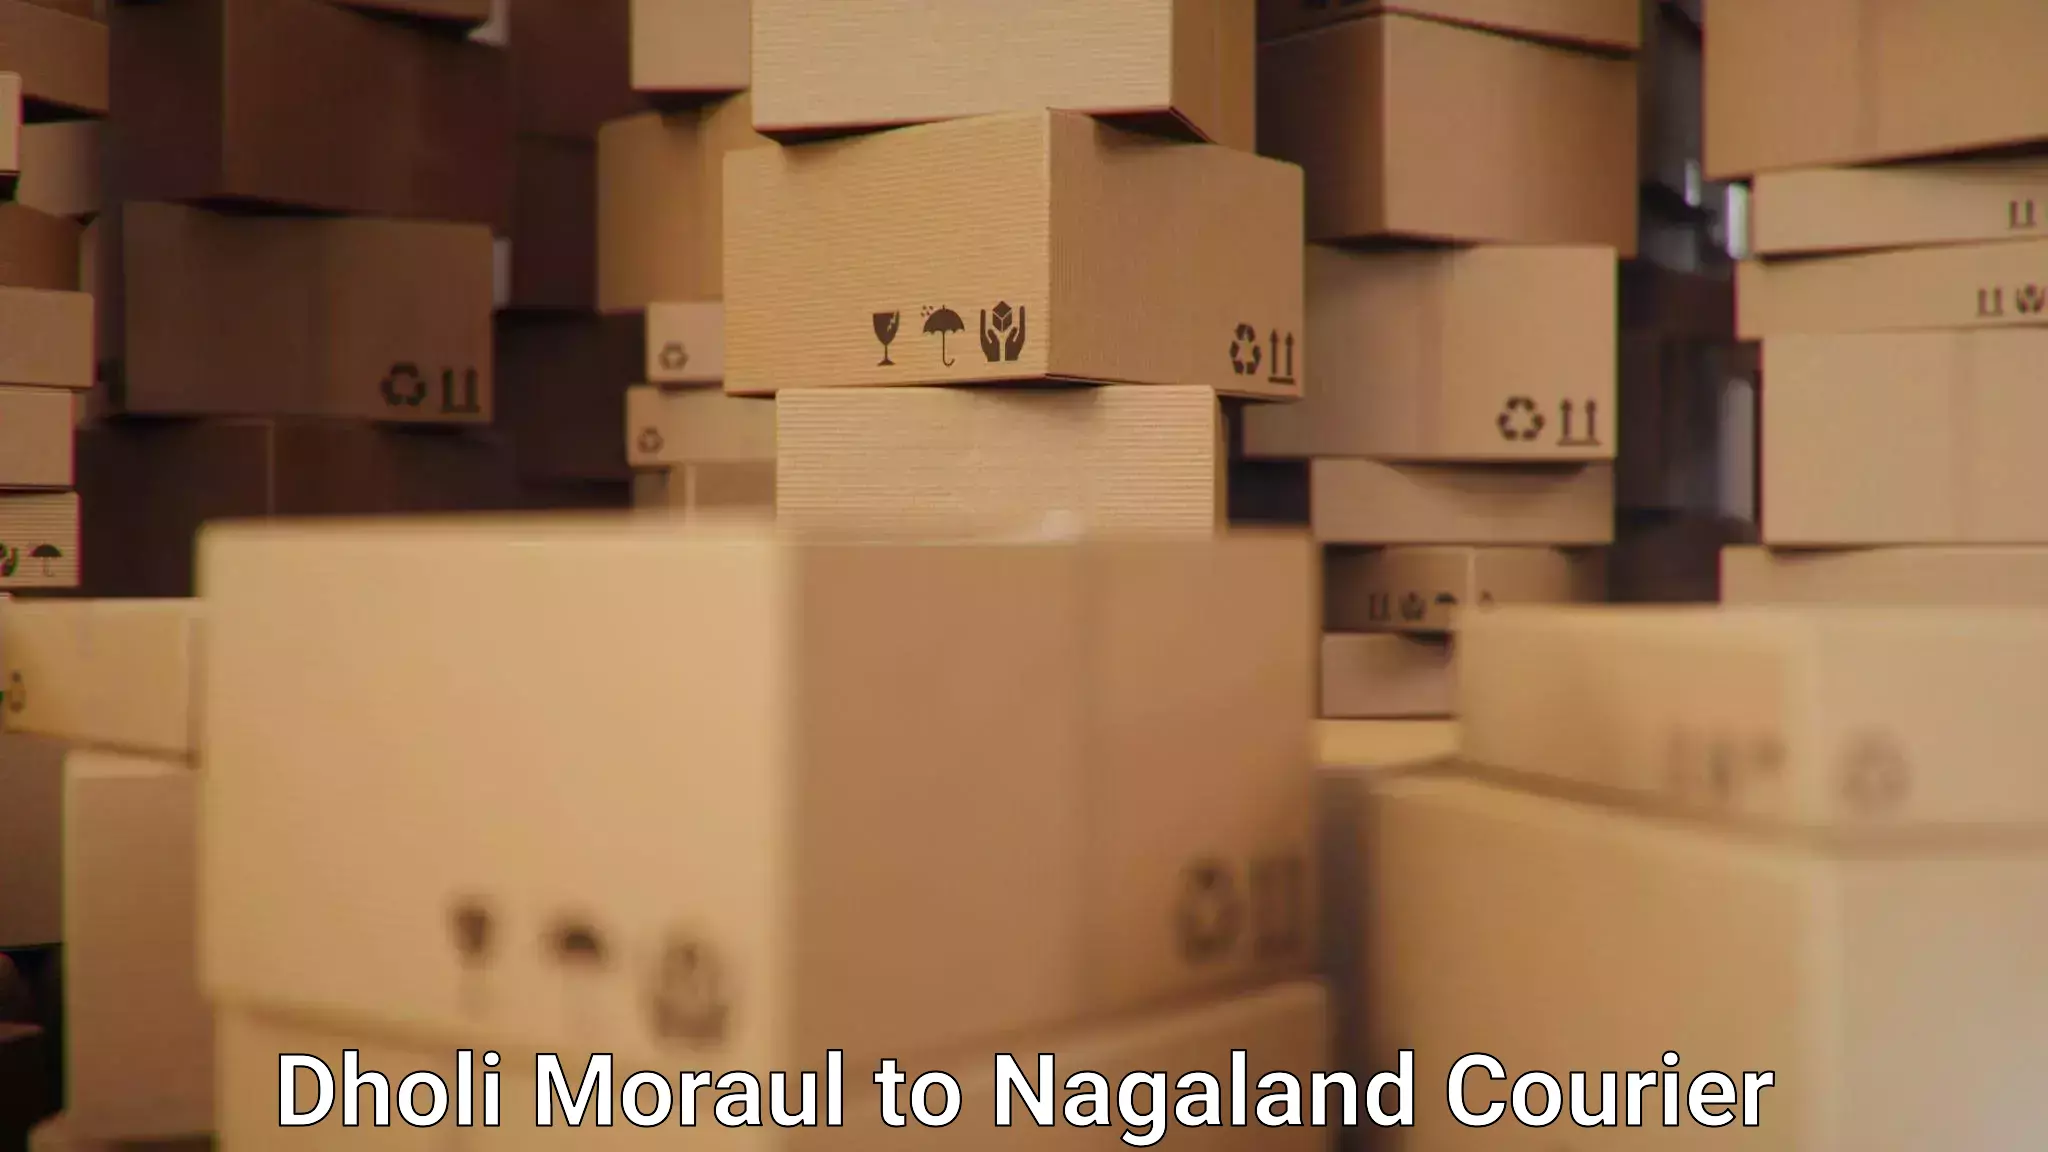 Courier service comparison Dholi Moraul to Nagaland